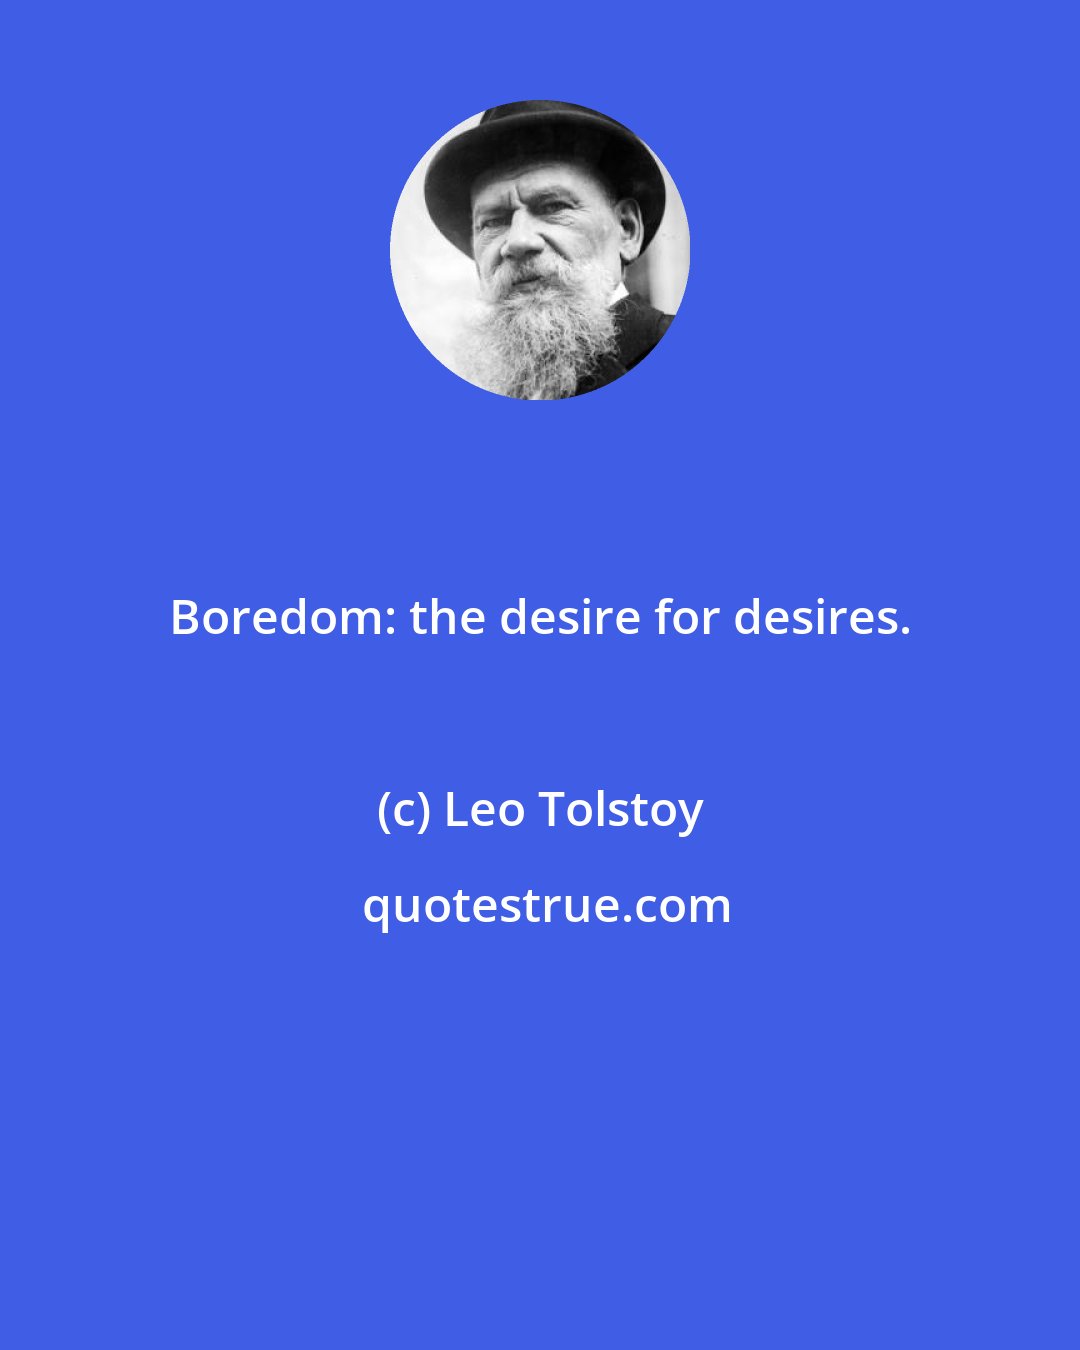 Leo Tolstoy: Boredom: the desire for desires.